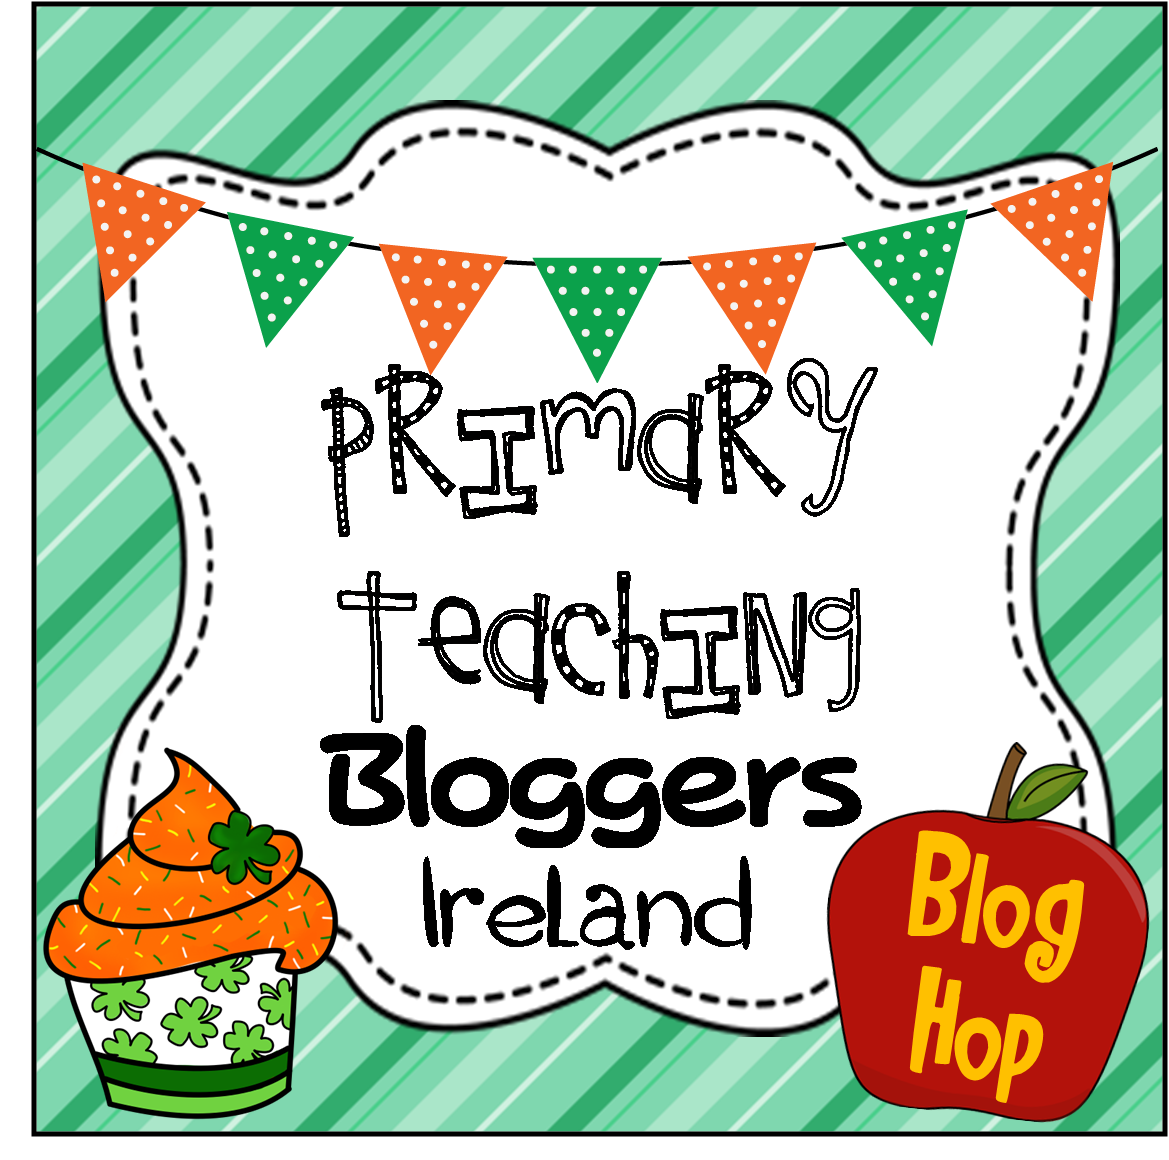 A Crucial Week Primary Teaching Bloggers Ireland Blog Hop